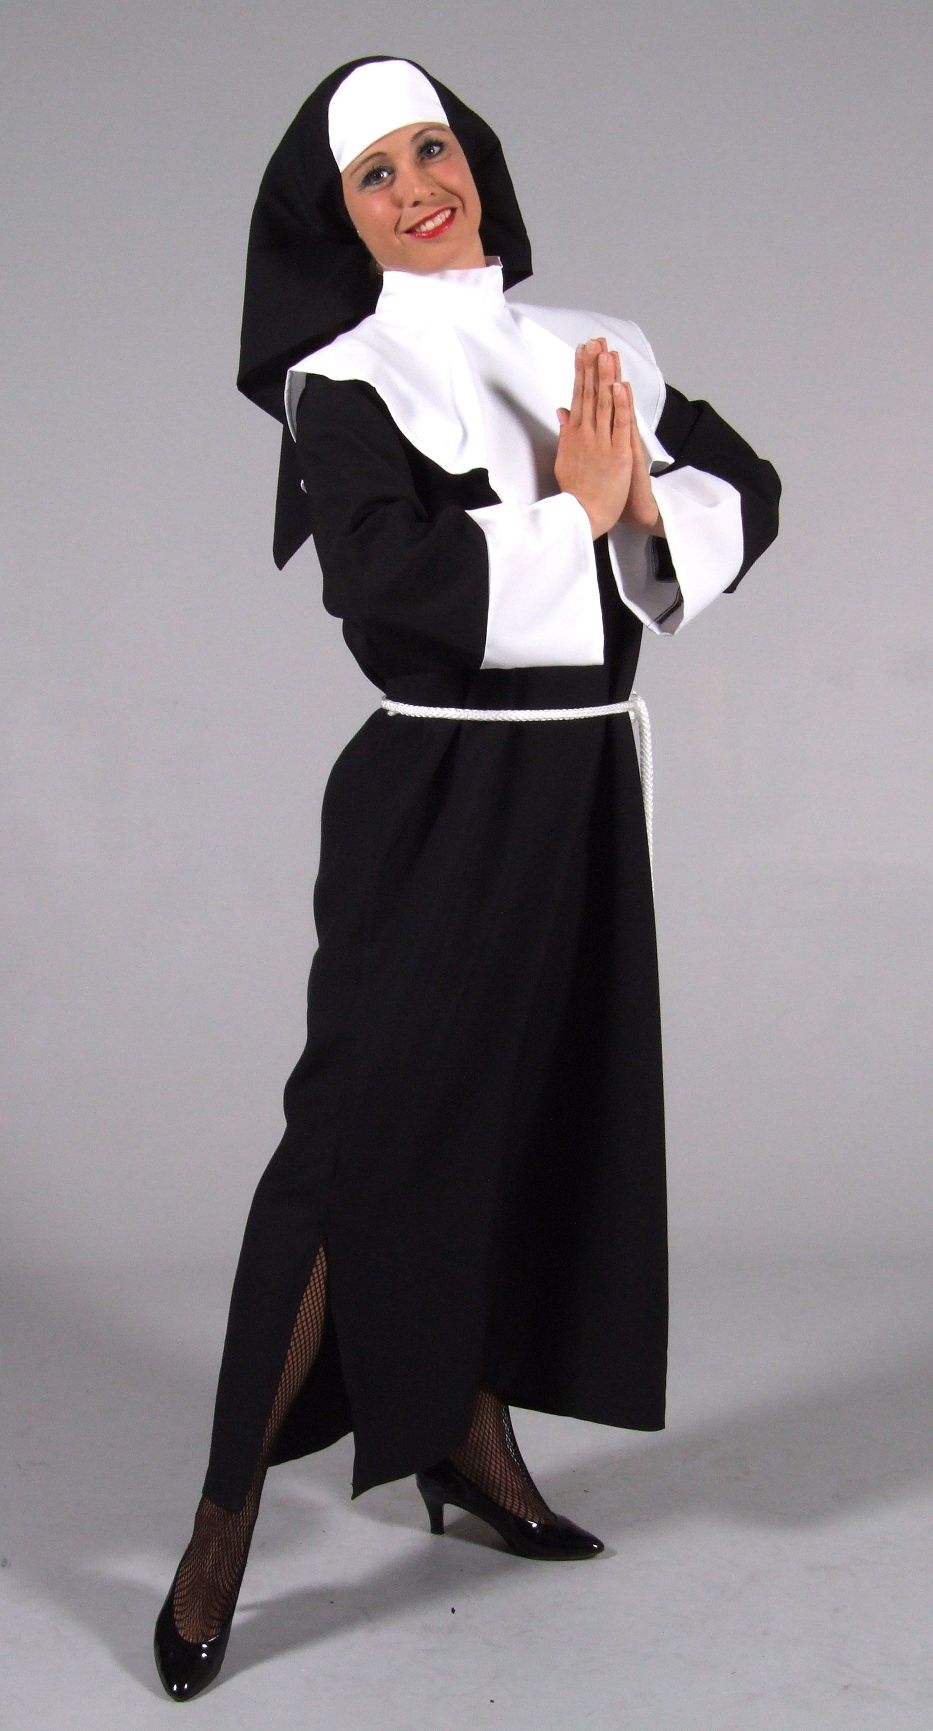 Sexy Nun wearing Black Fishnet Pantyhose and Black Long Dress